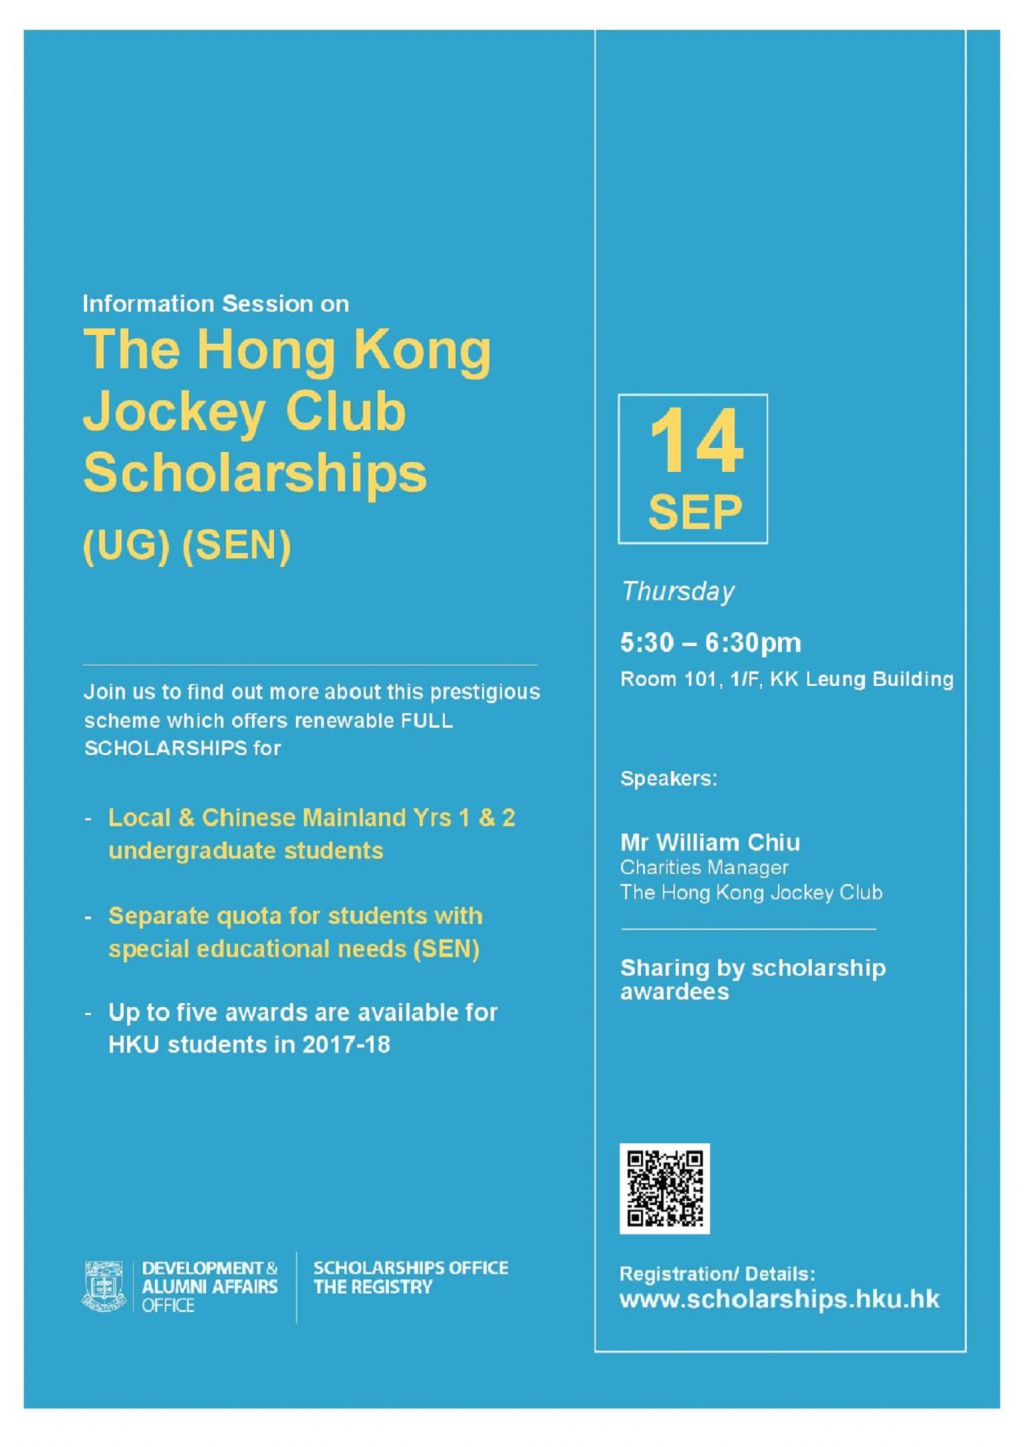 Hong Kong Jockey Club Scholarships for Undergraduate Students